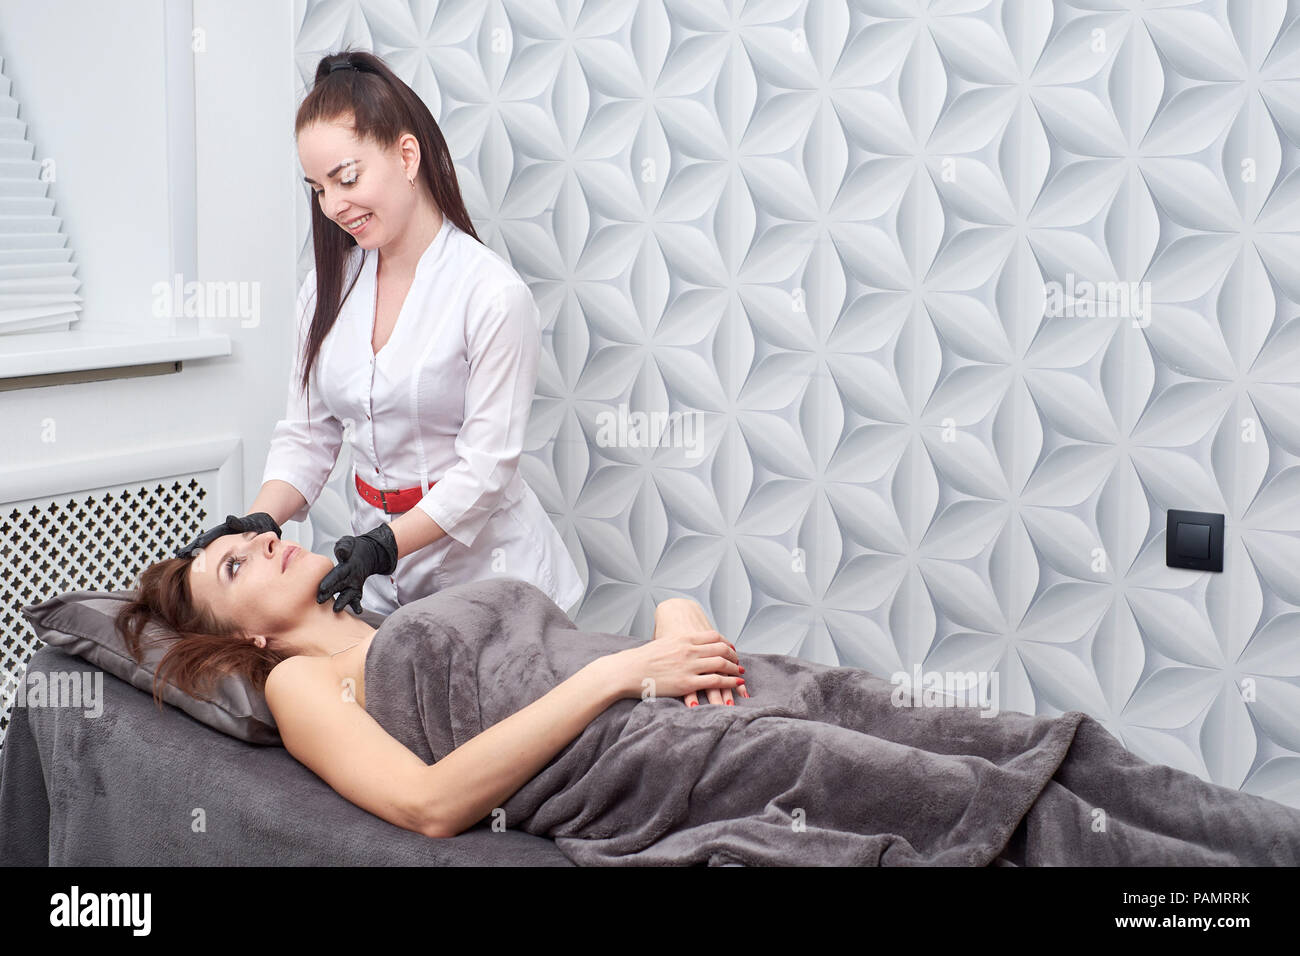 Massage and facial peels at the salon using cosmetics Stock Photo